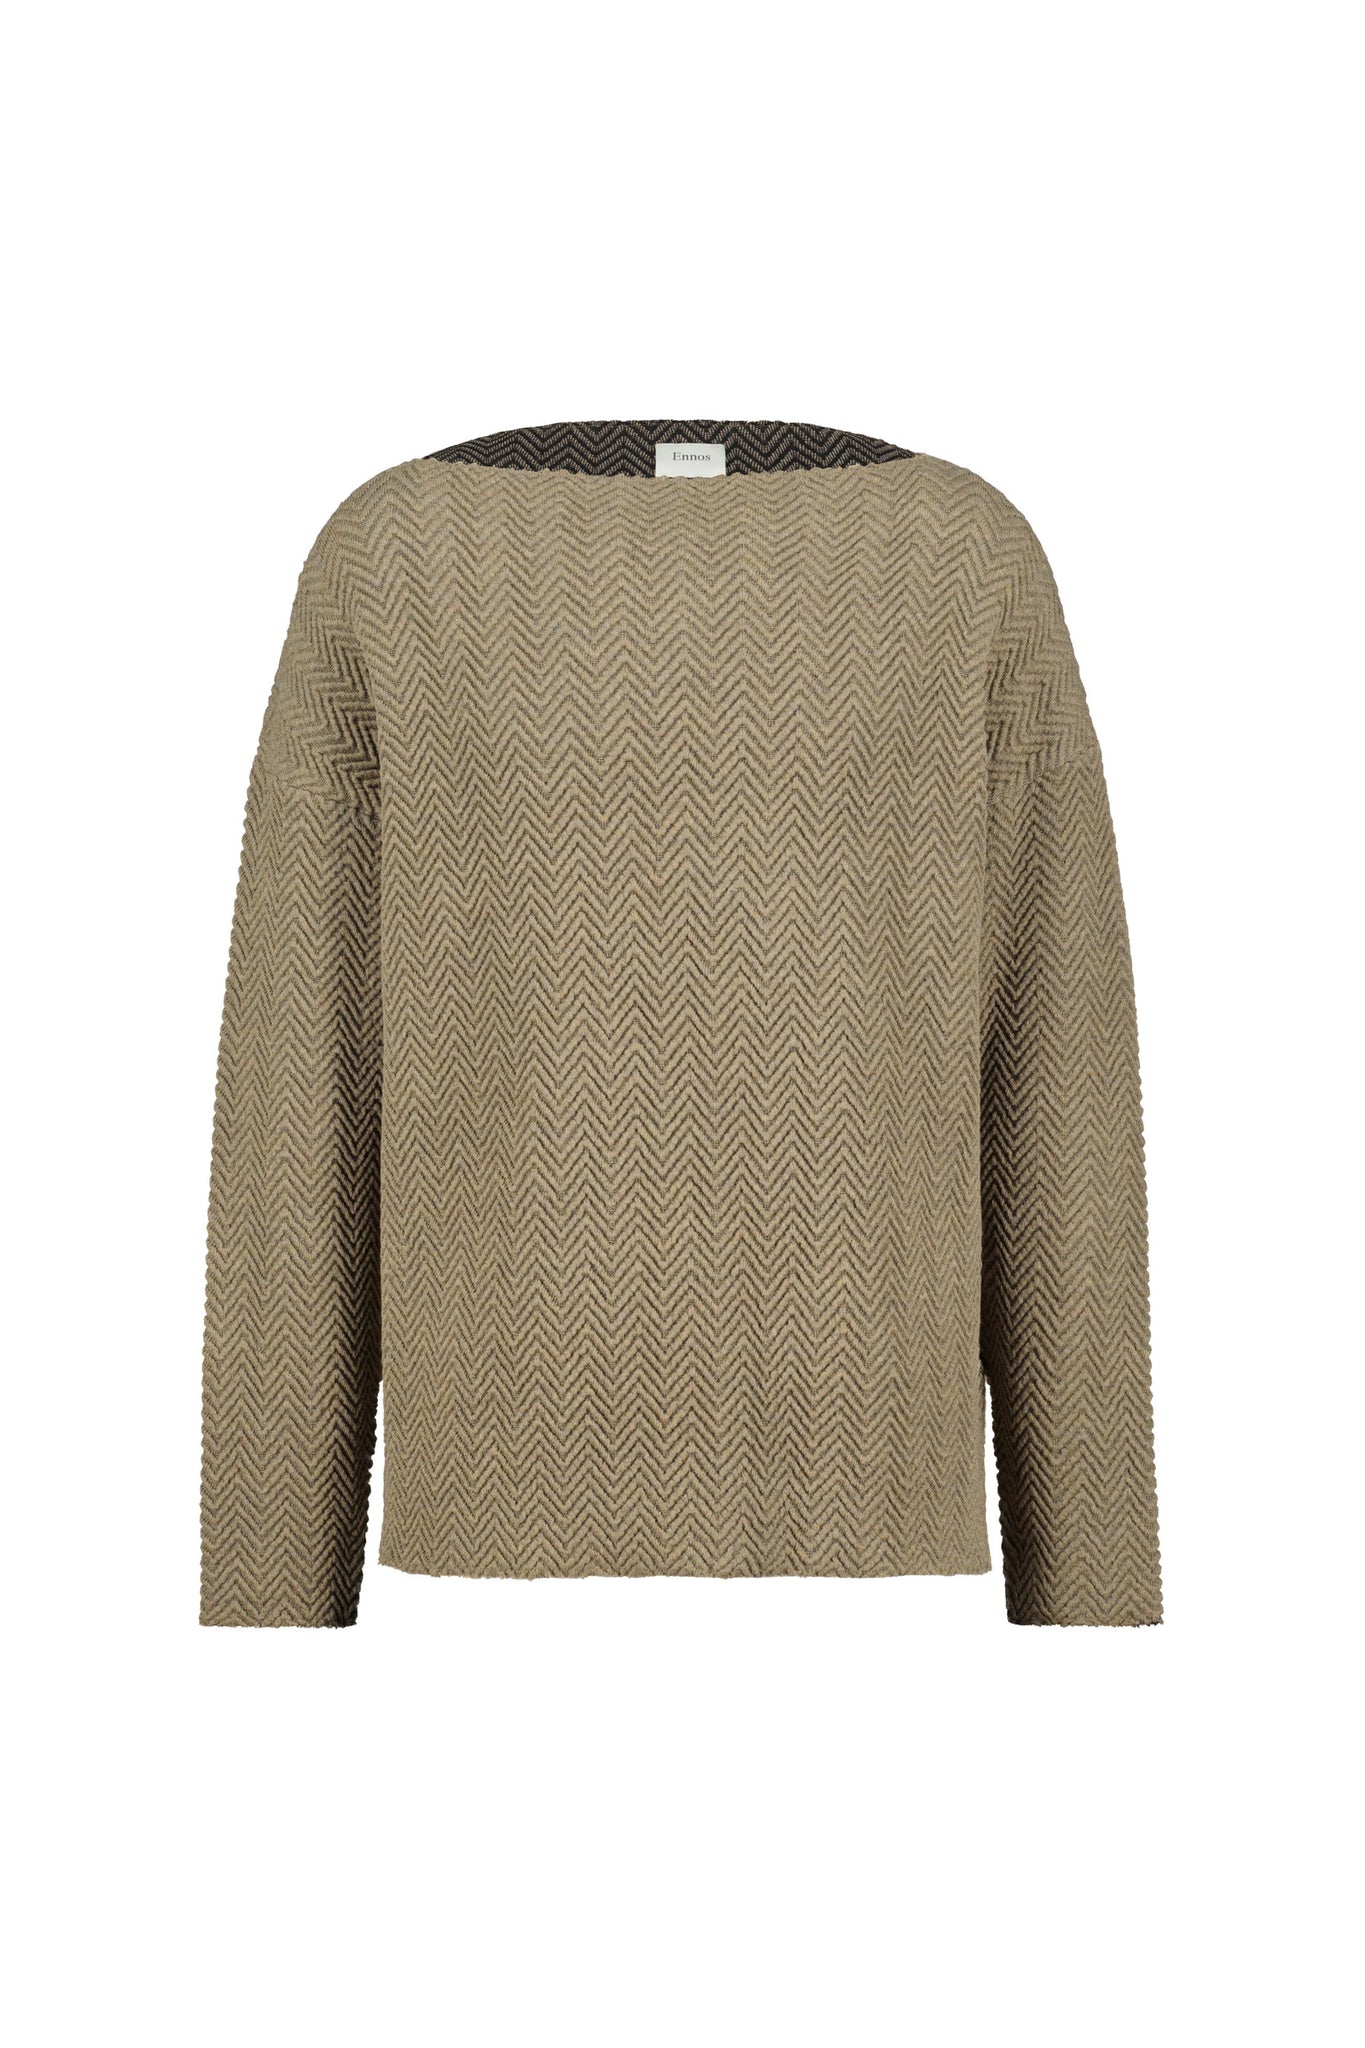 Hesse knit